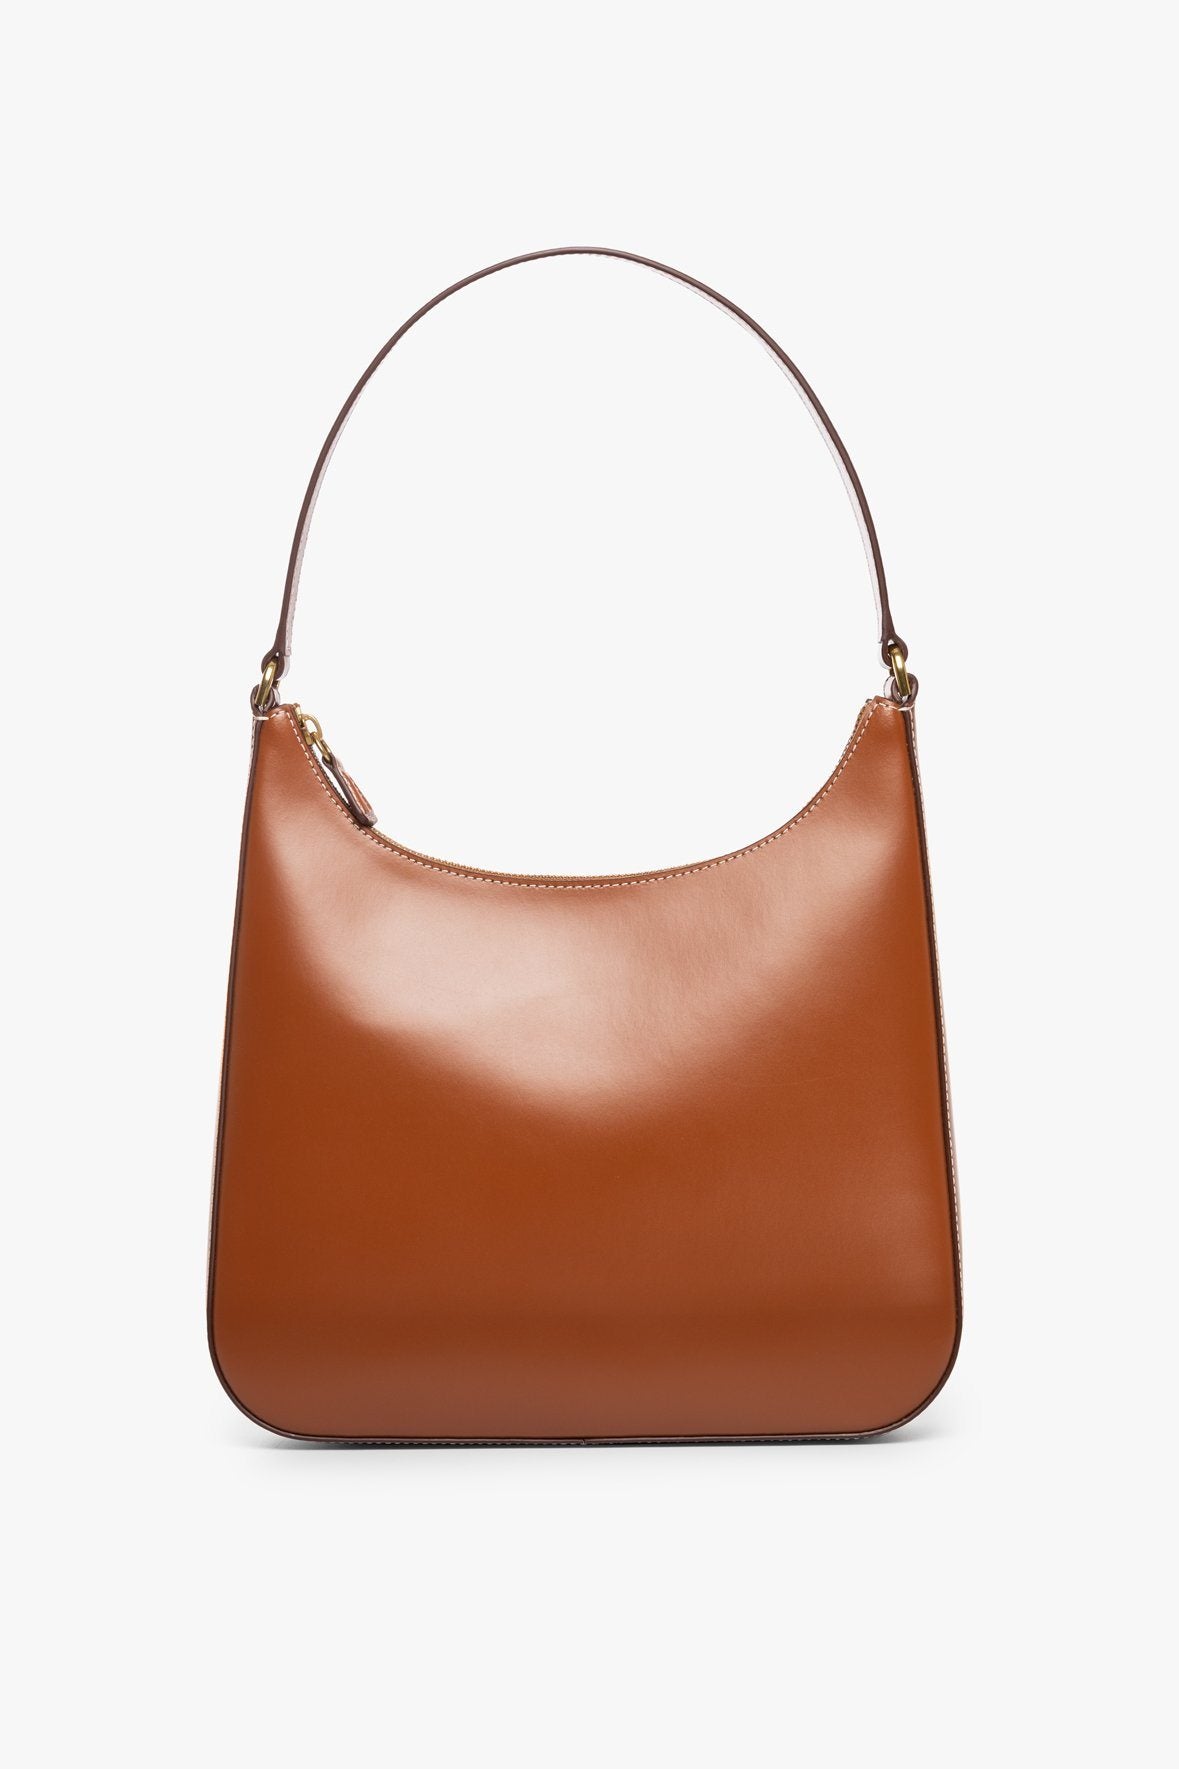 Thoughts on the Celine Ava bag? : r/handbags